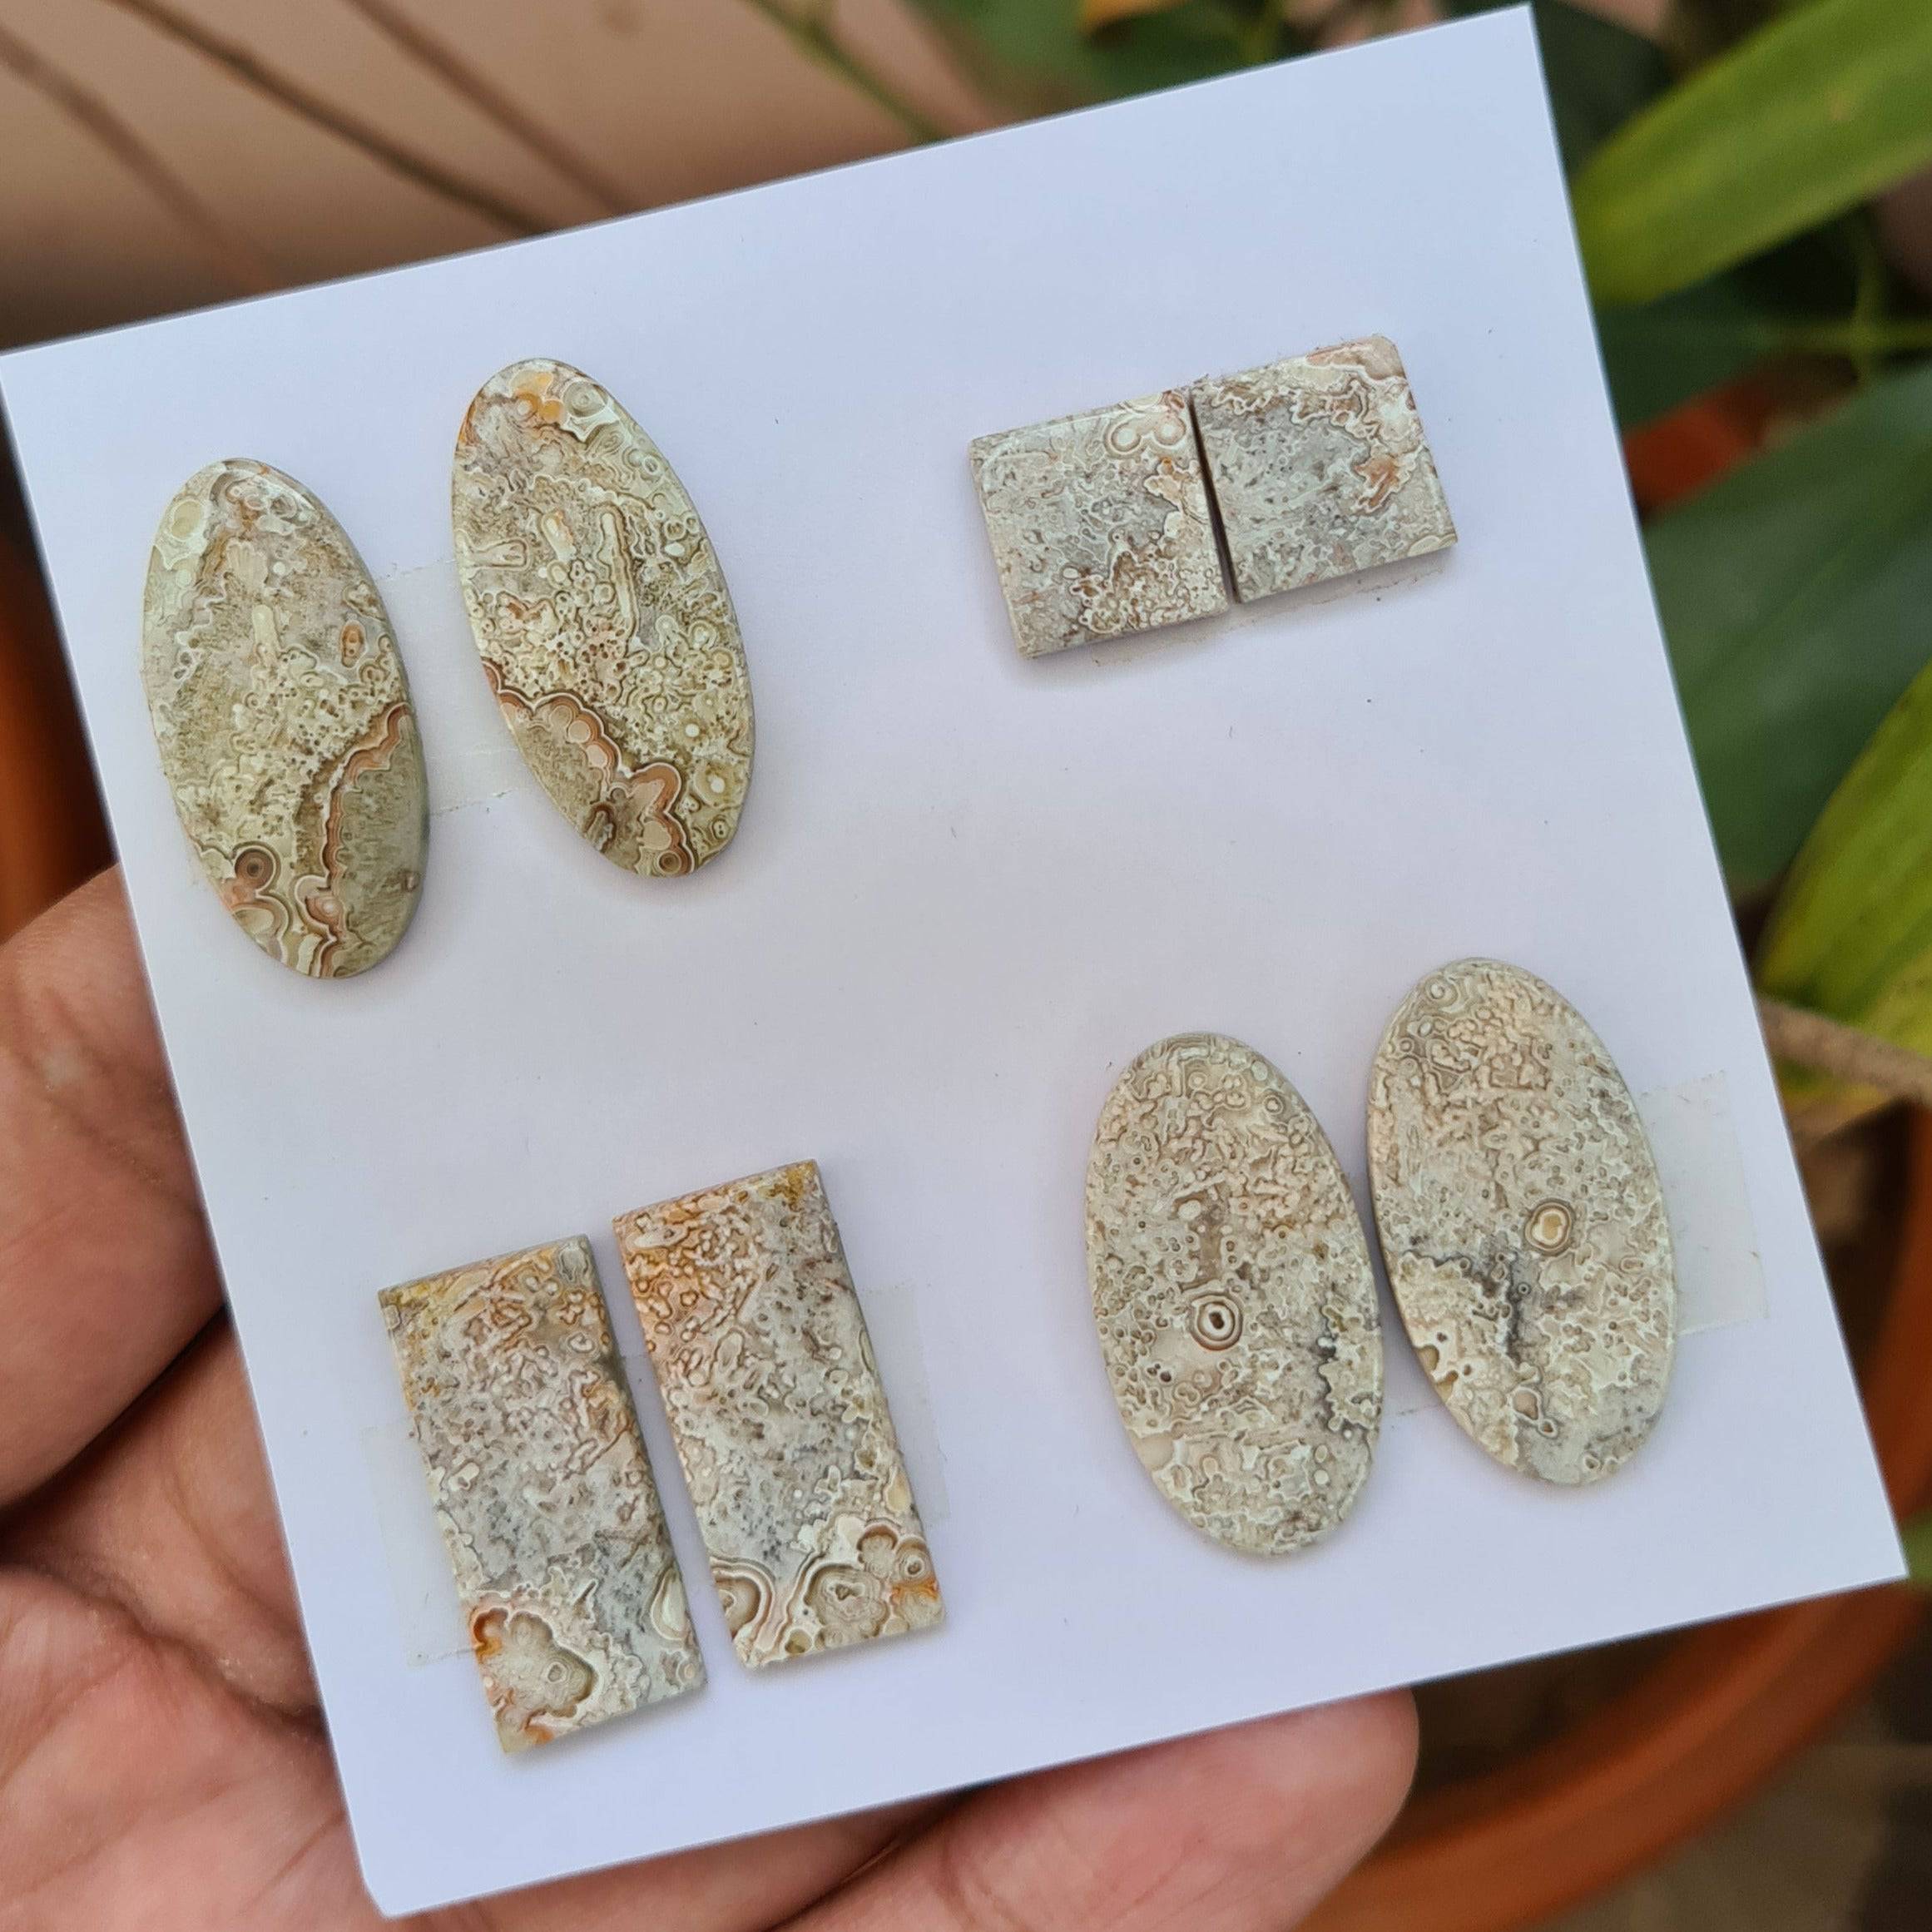 8 Pcs Pair Natural Jasper Cabochon Gemstones | Mix Shape, 11-27mm Size, - The LabradoriteKing